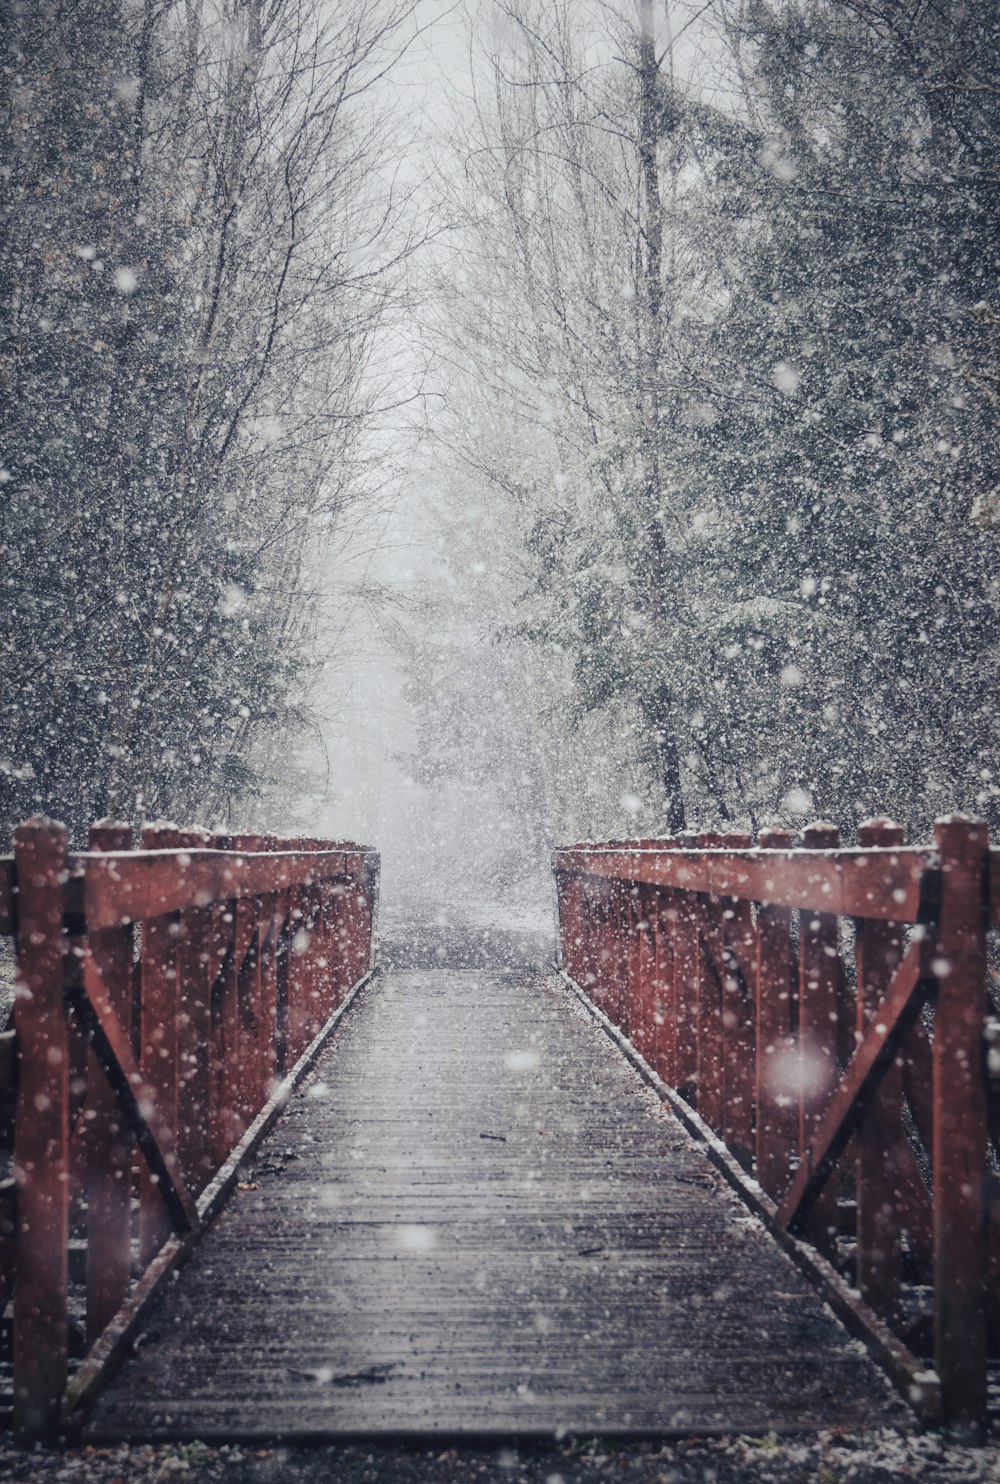 a bridge that has snow falling on it